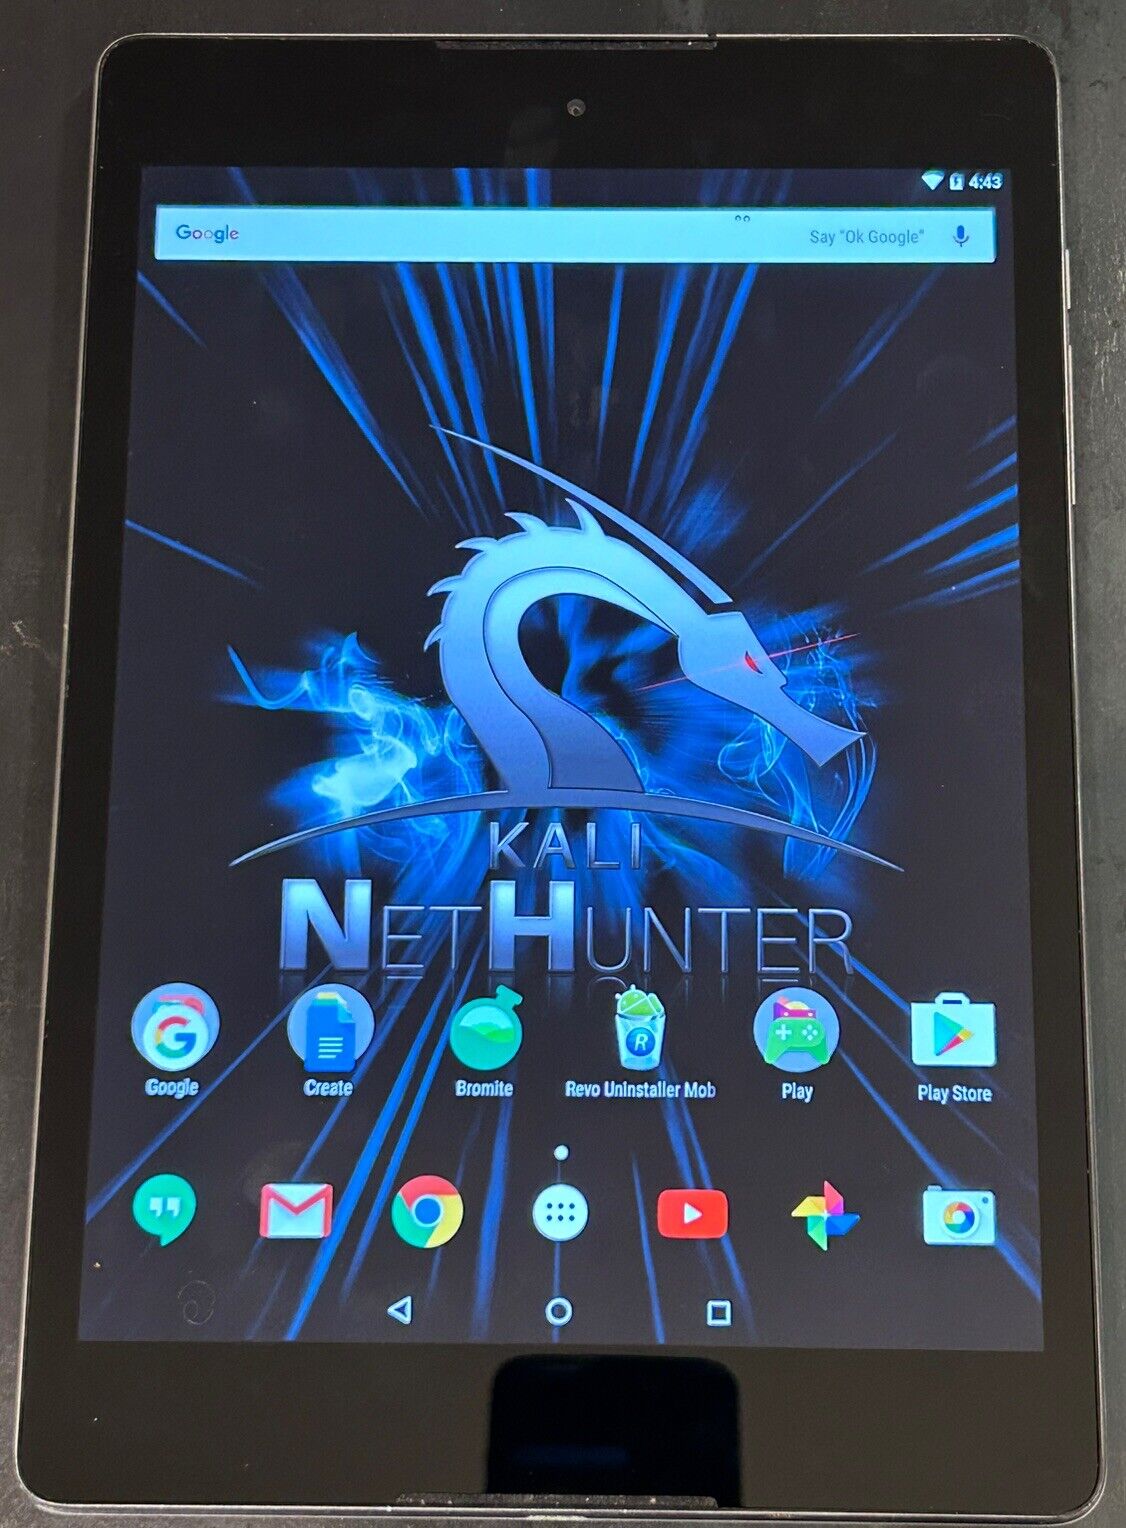 Kali Linux NetHunter Nexus 9 Tablet Android 10.1 Inch Pentesting Tablet Kit